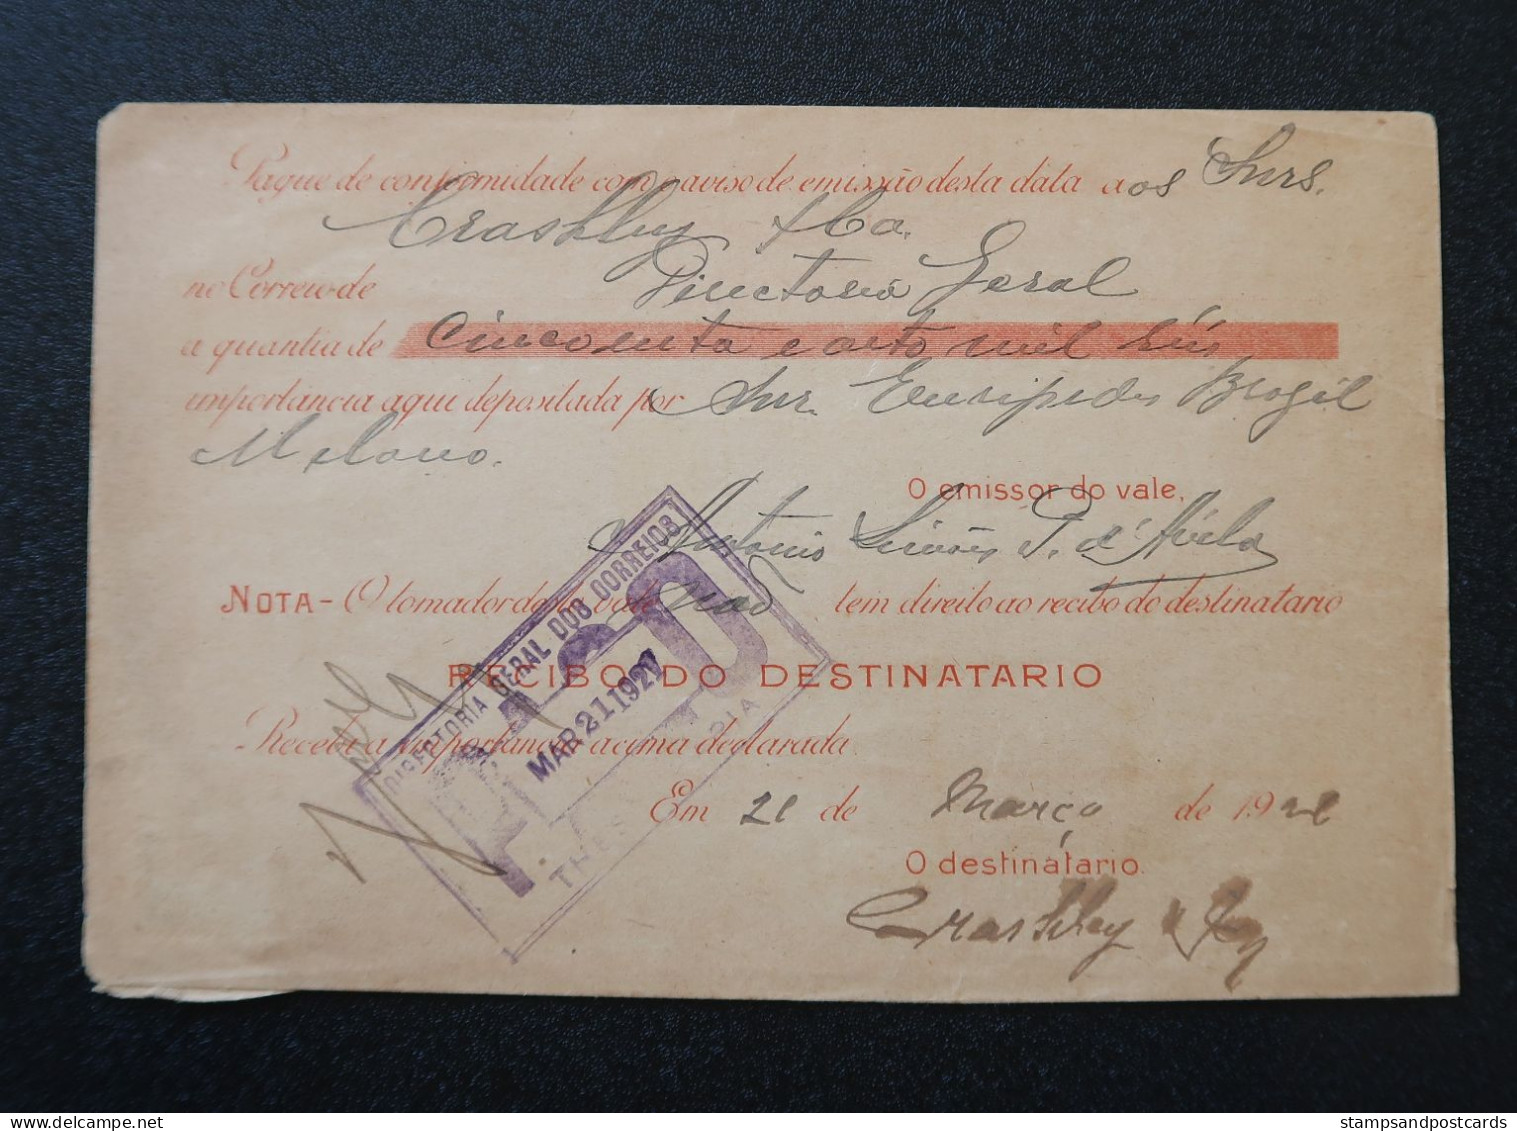 Brèsil Brasil Mandat Vale Postal 1921 Alegrete Rio Grande Do Sul Timbre Fiscal Deposito Brazil Money Order Revenue Stamp - Storia Postale